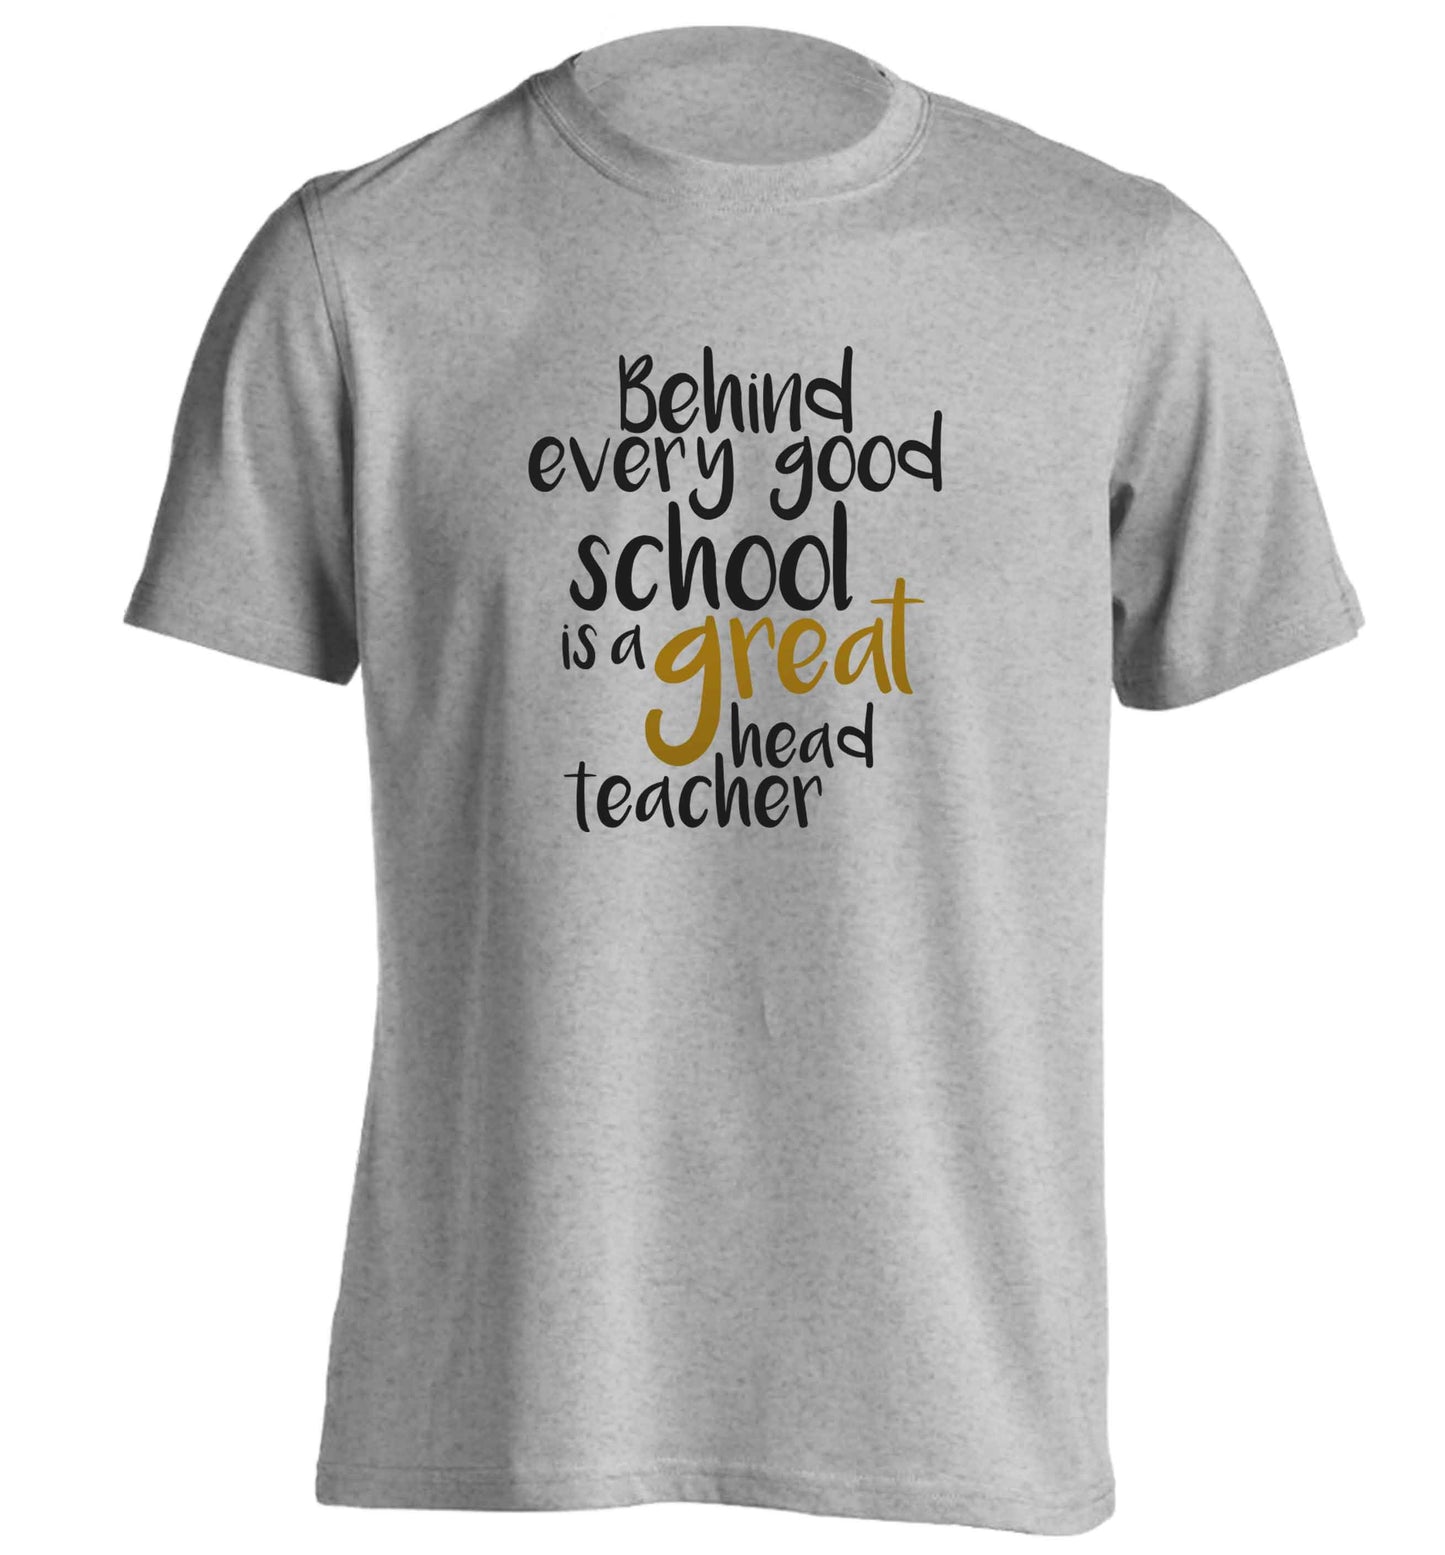 Behind every good school is a great head teacher adults unisex grey Tshirt 2XL